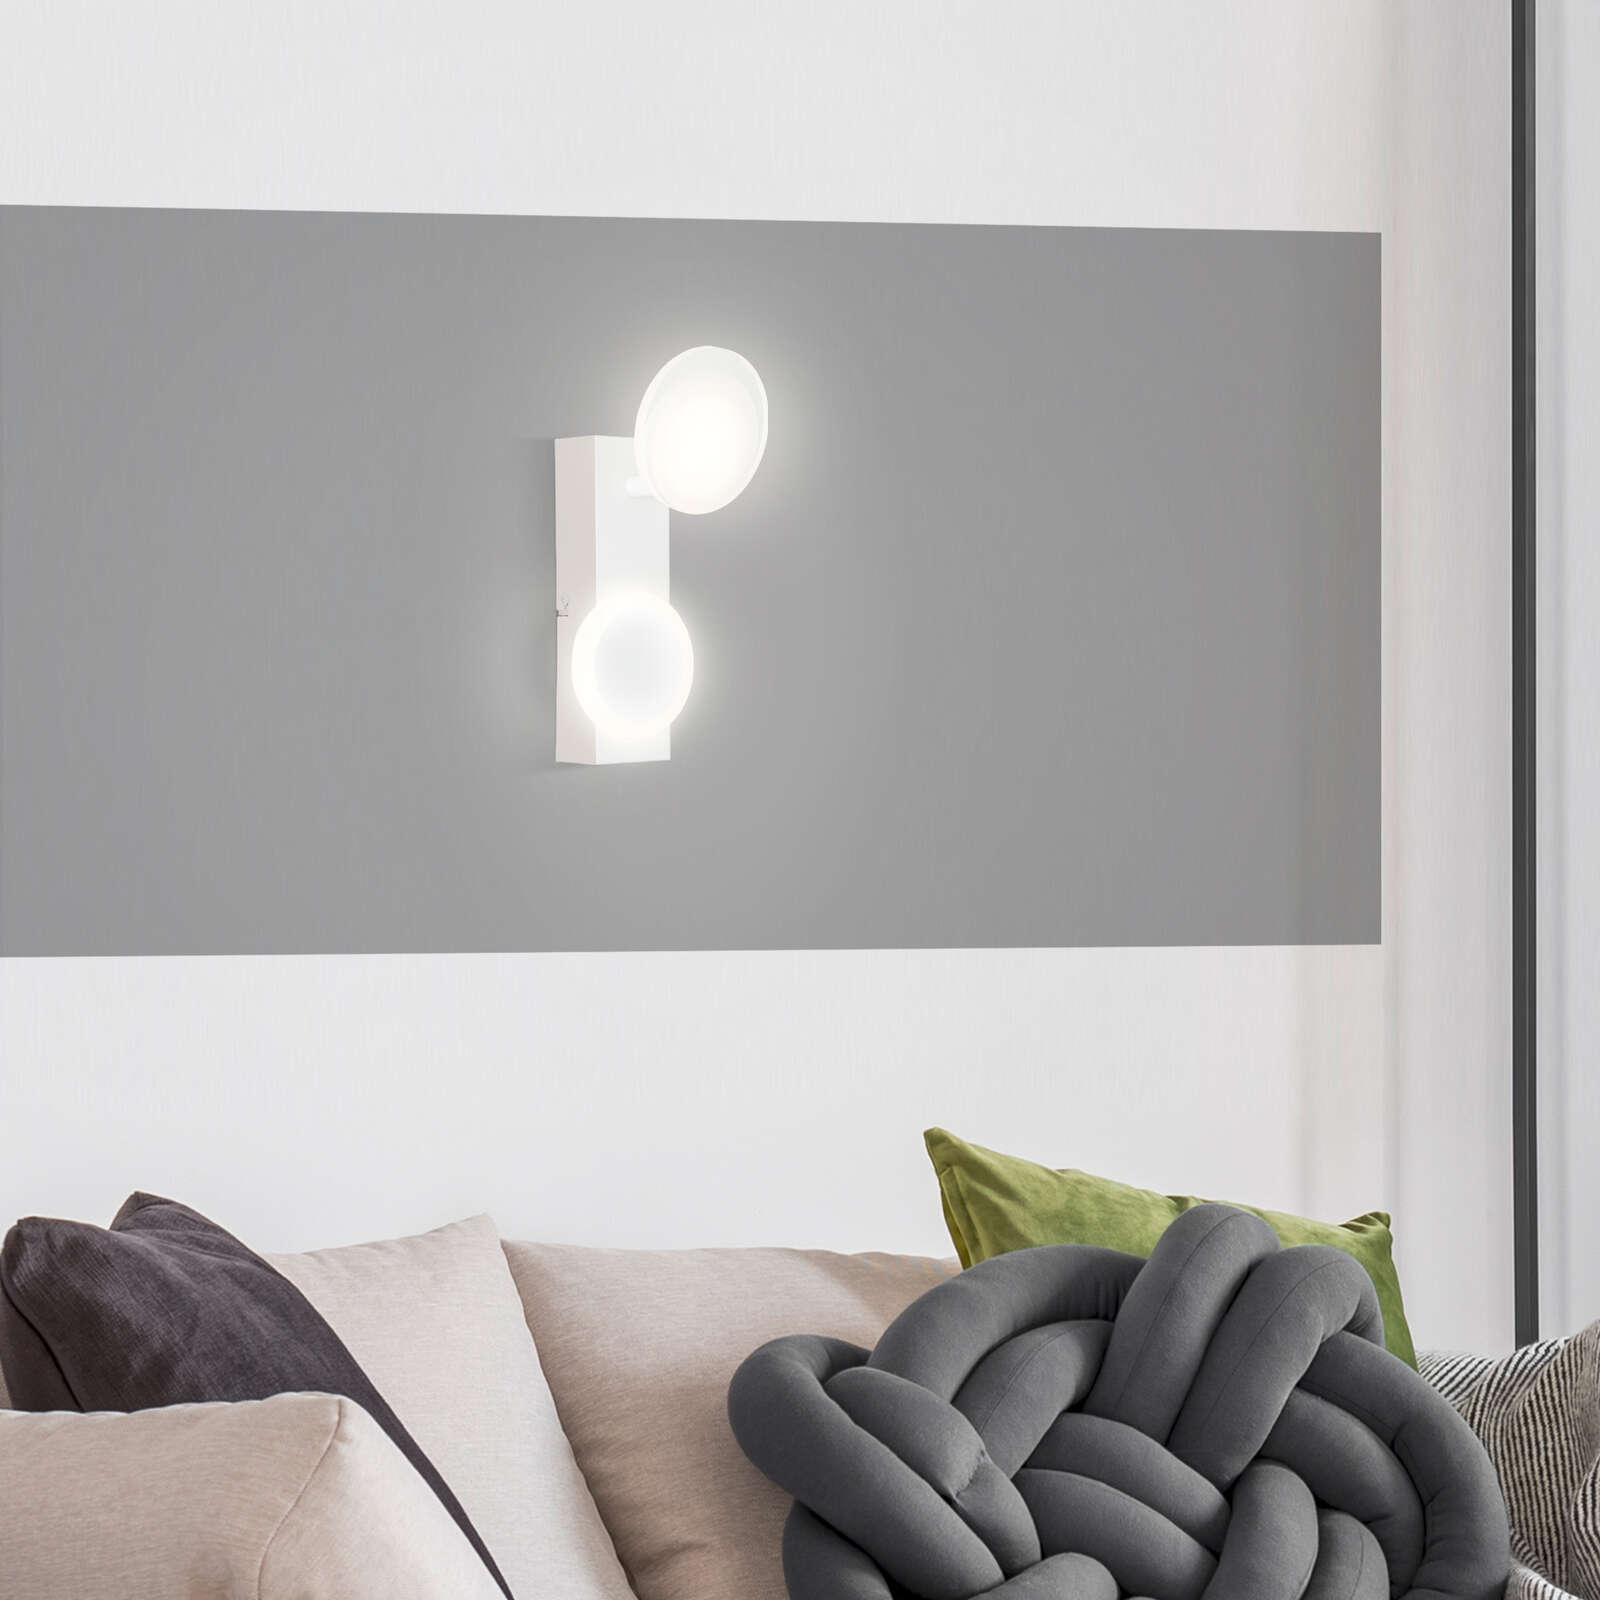             Plastic wall spotlight - Lilly 1 - White
        